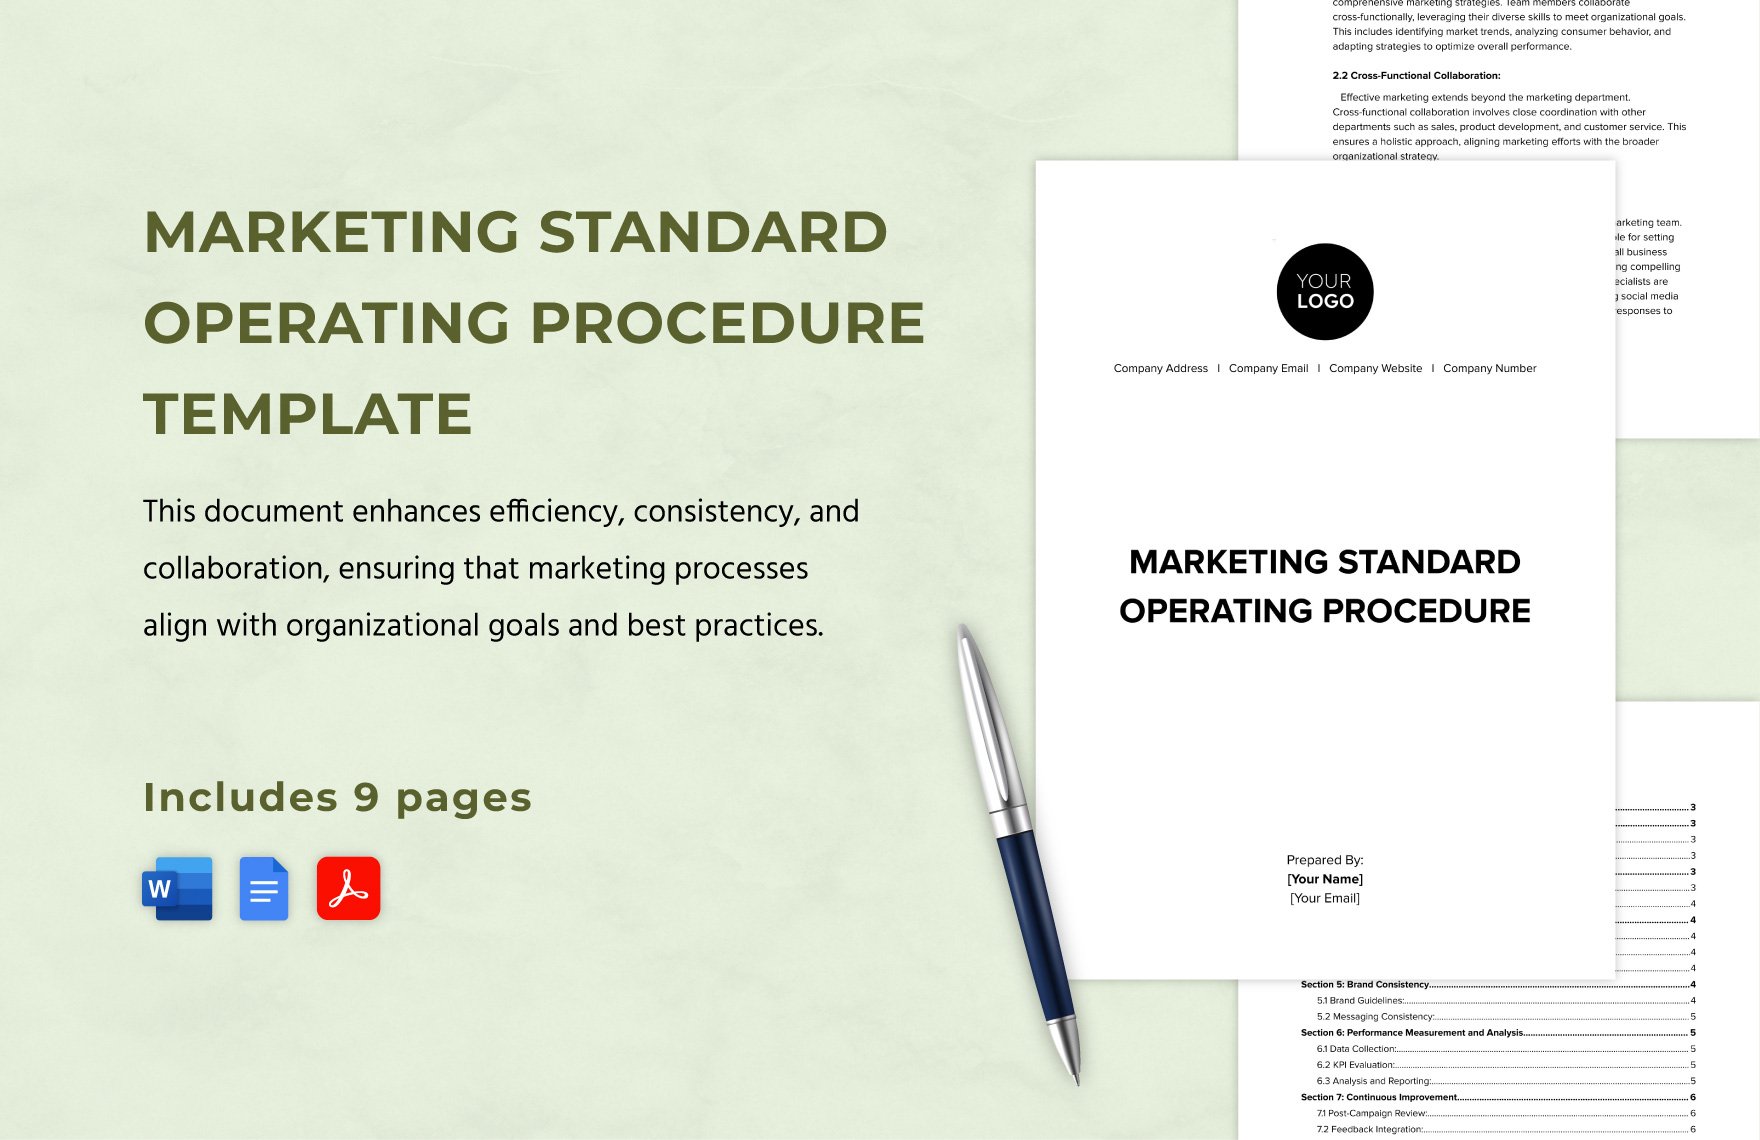 Marketing Standard Operating Procedure Template in Word, Google Docs, PDF